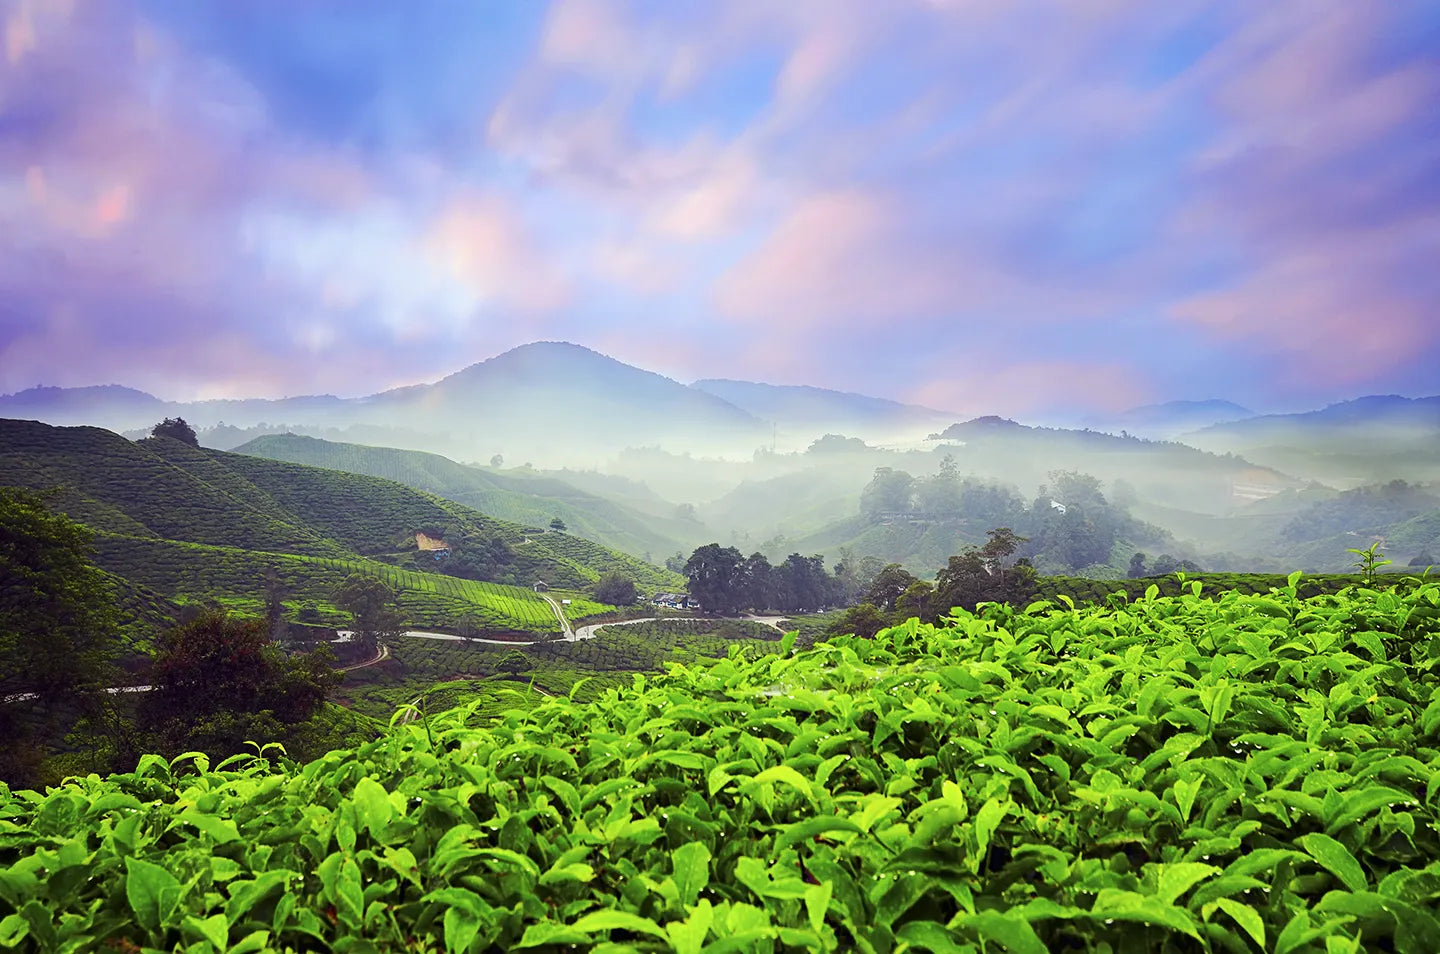 Tea farm in Kenya with lush green tea plants and purple sky